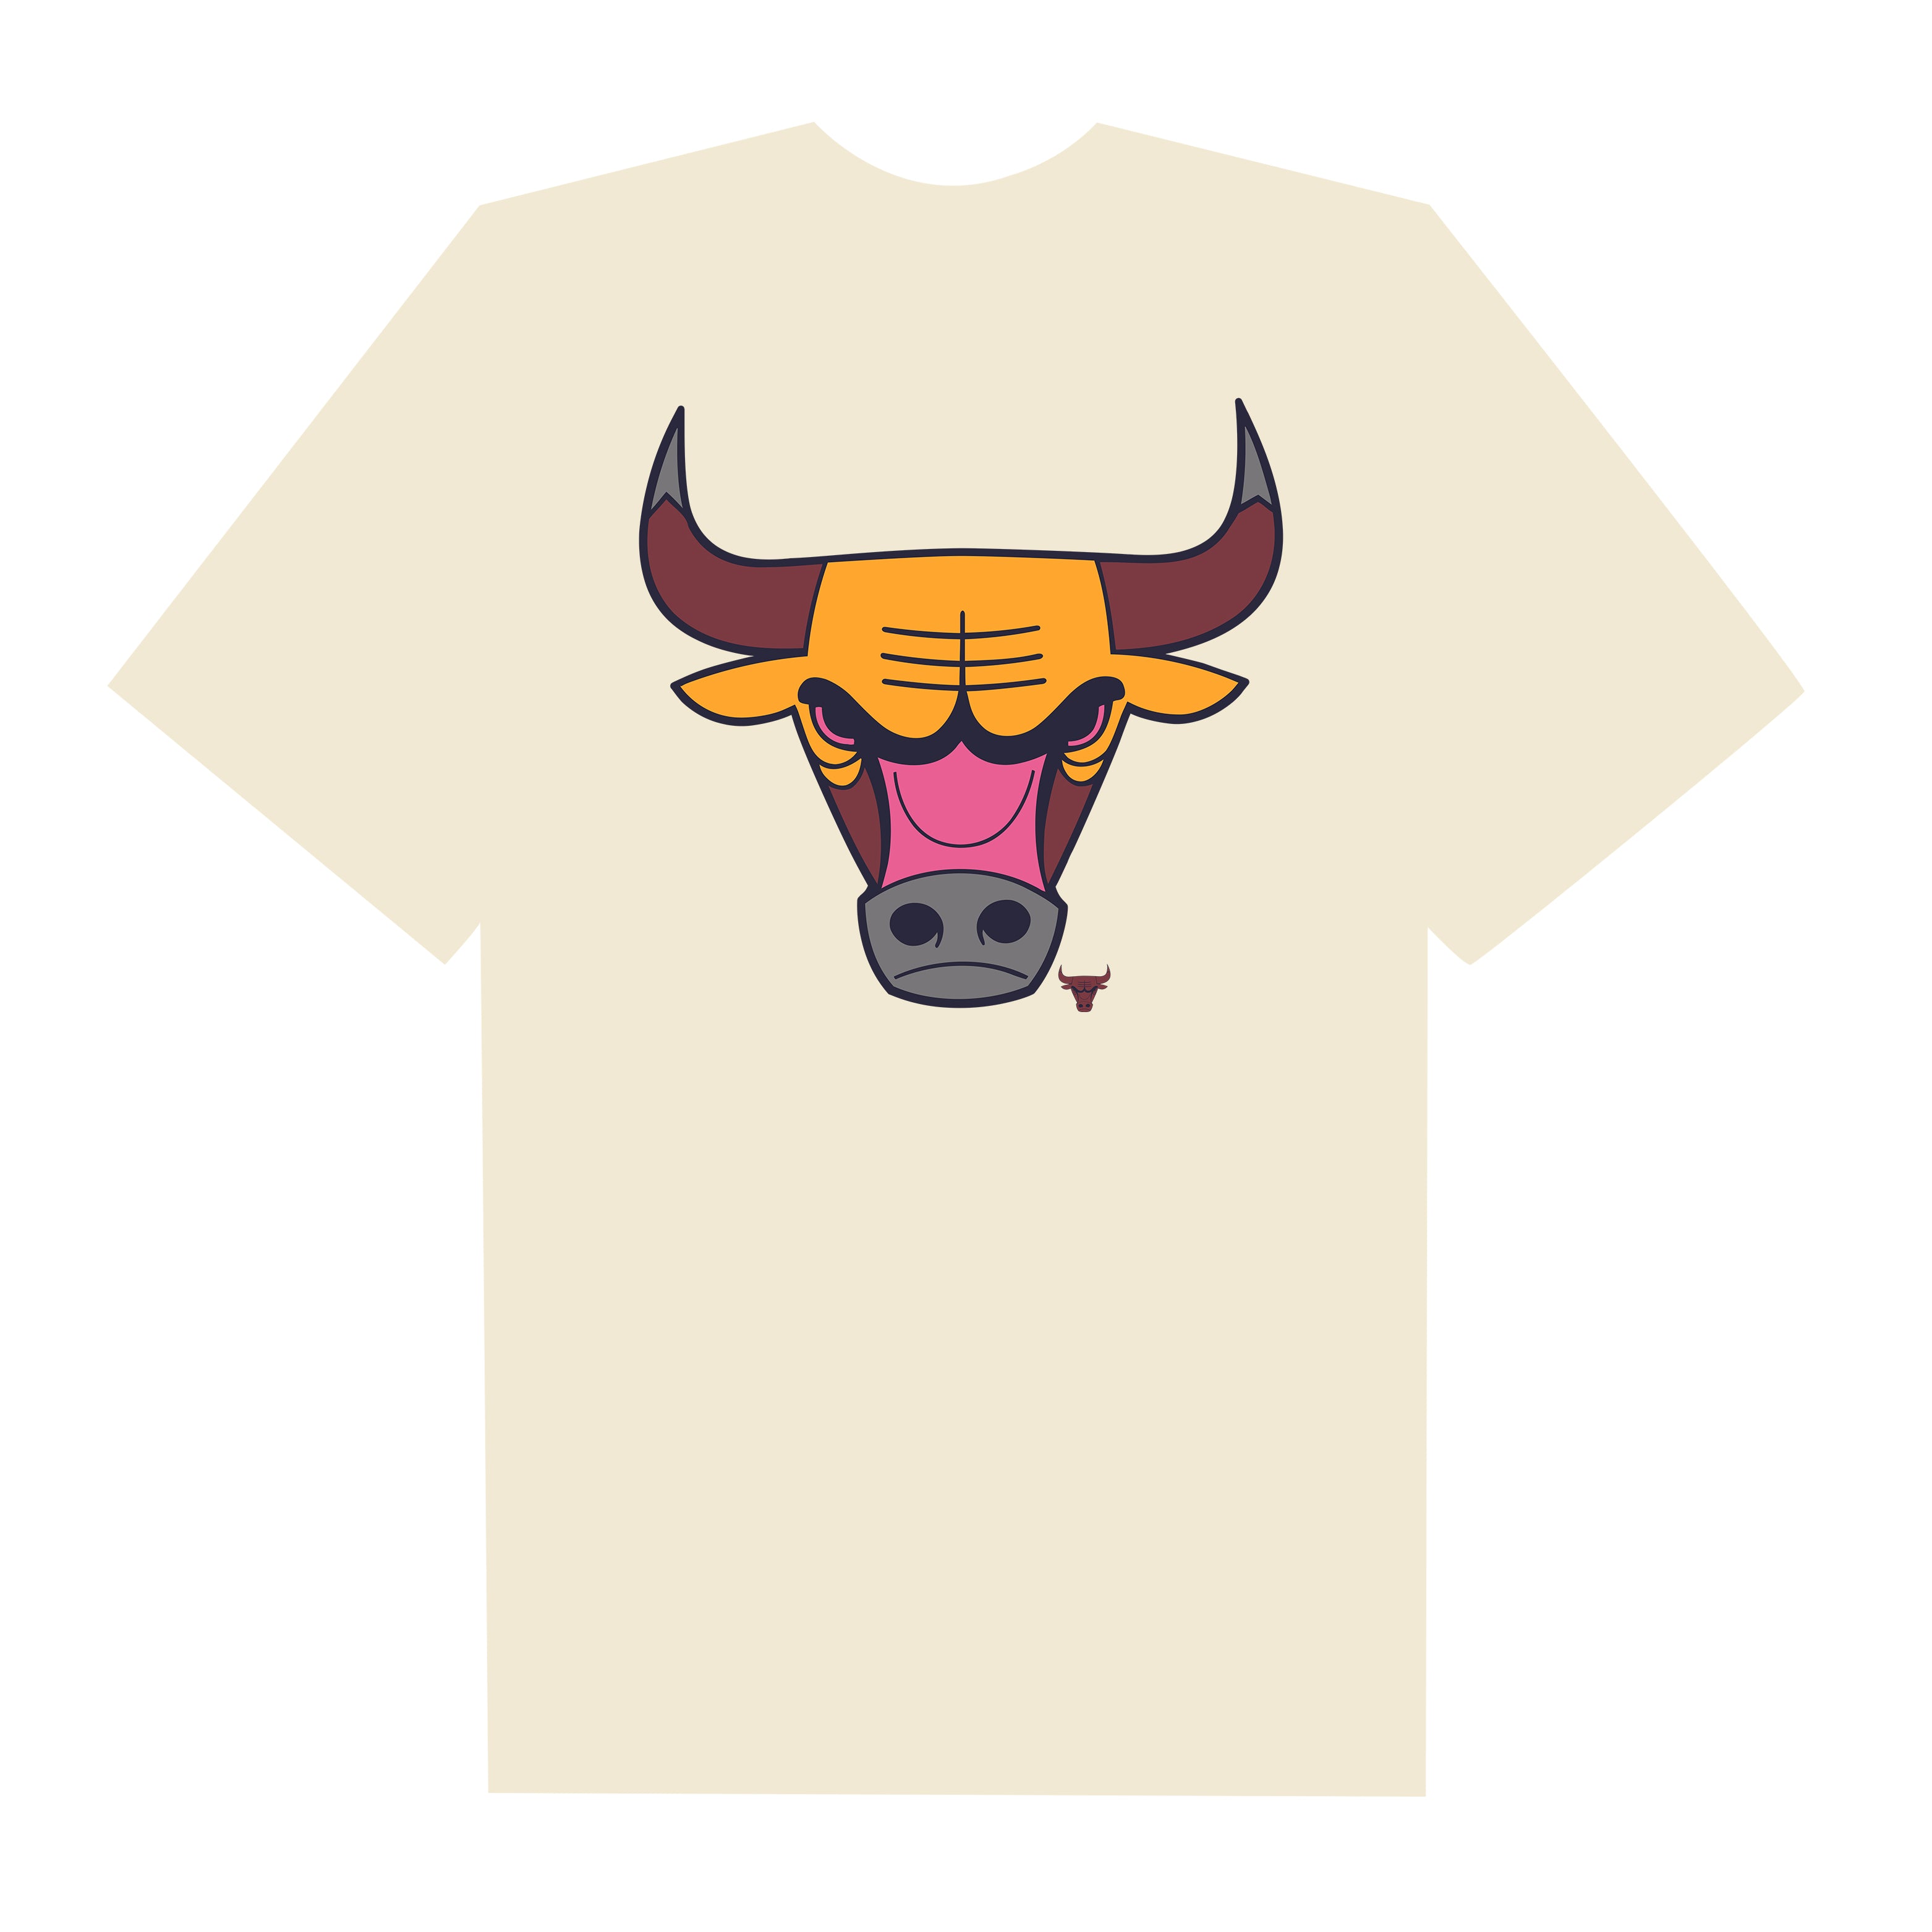 NBA Chicago Bulls Colorpack Green T-Shirt